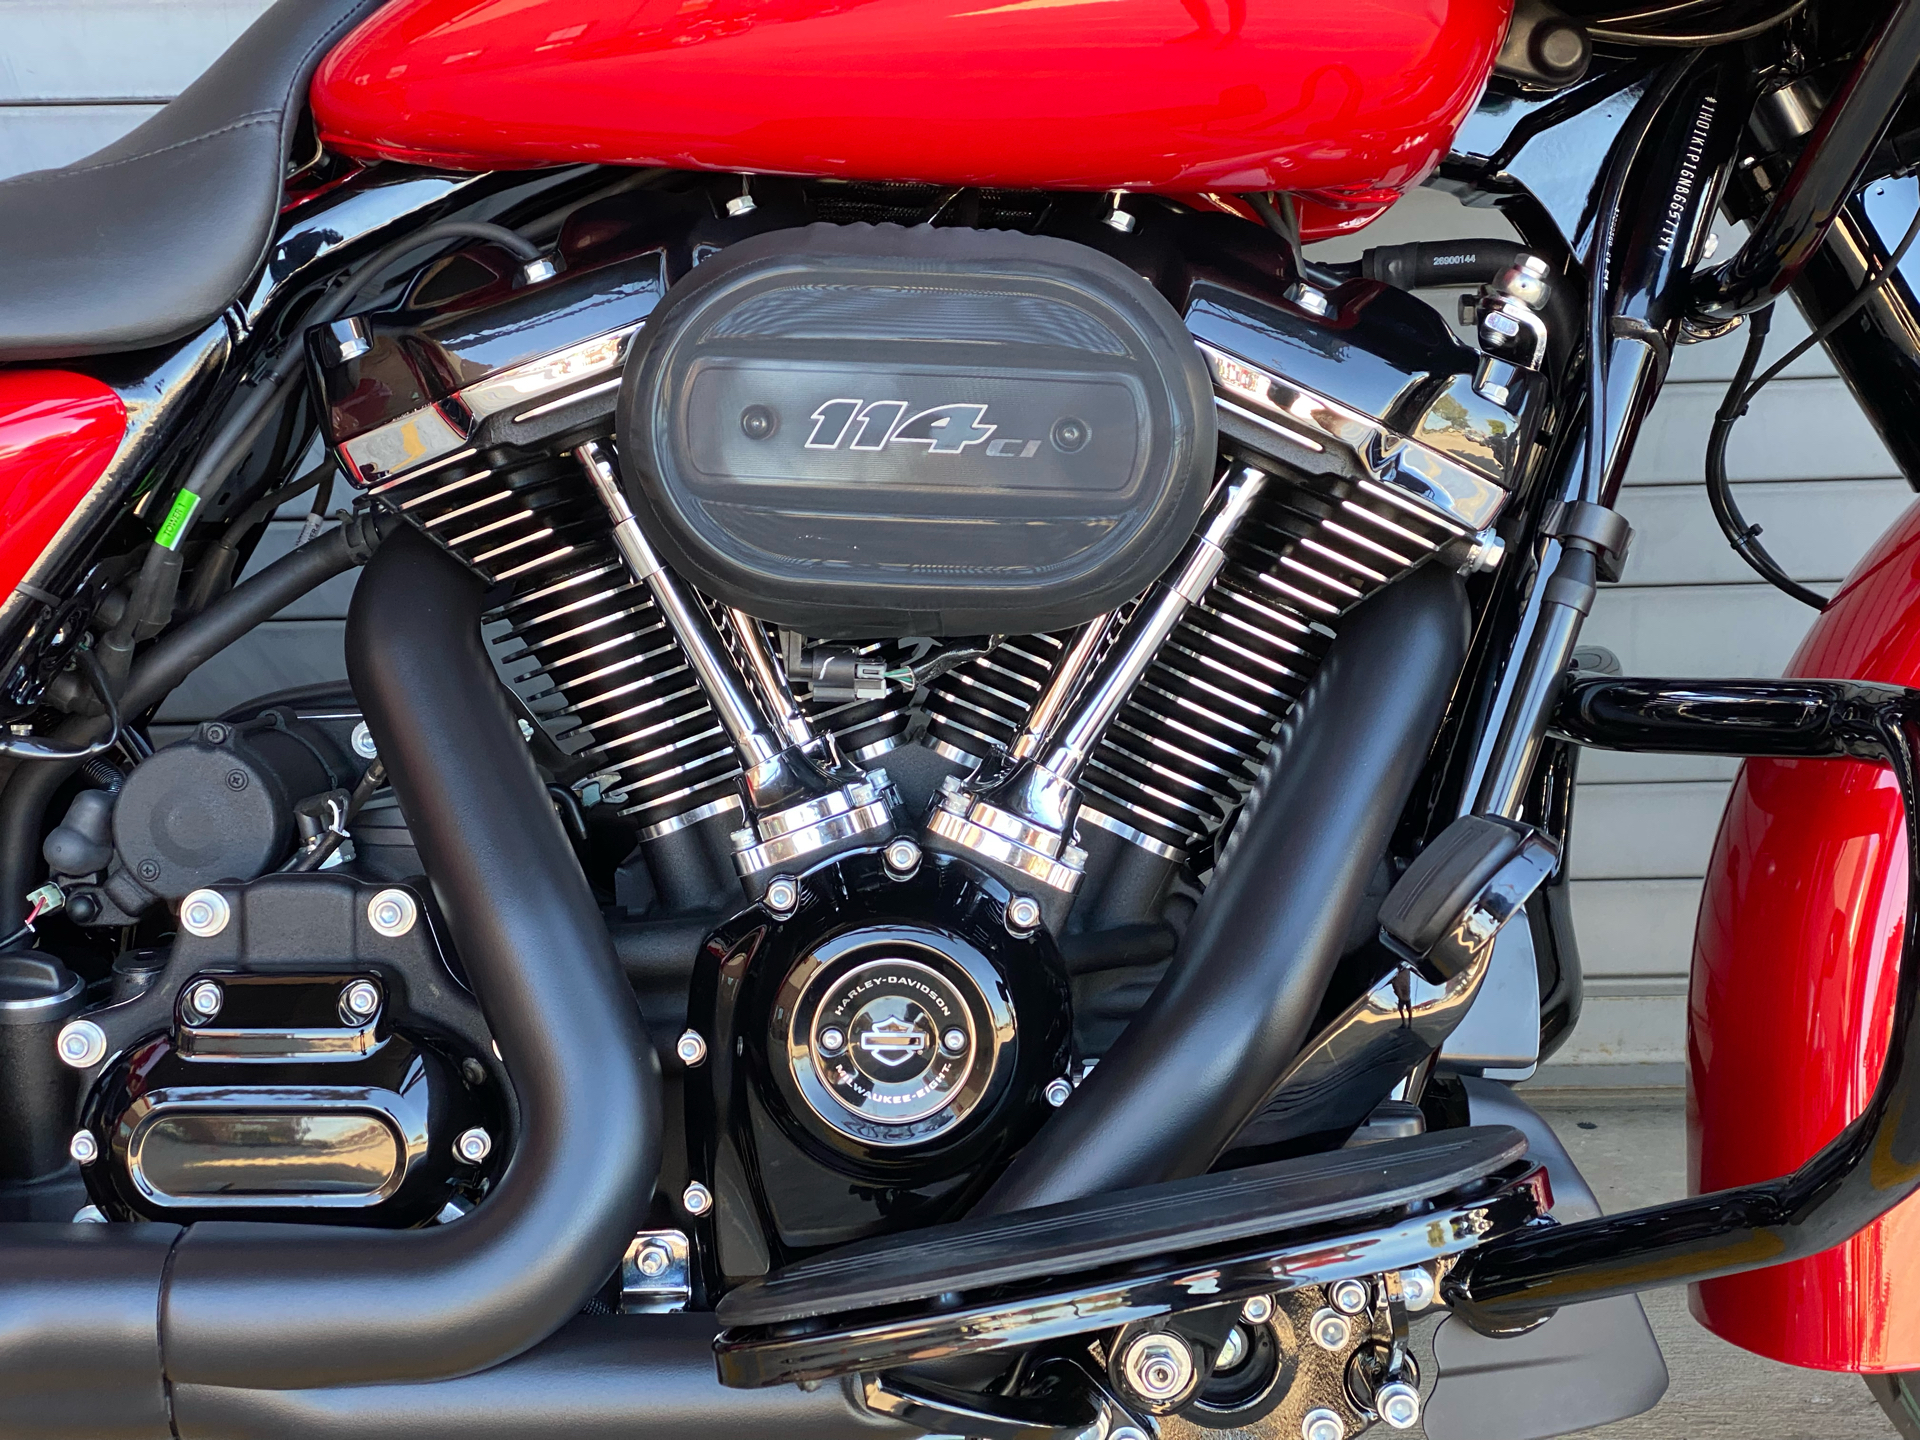 2022 Harley-Davidson Road Glide® Special in Carrollton, Texas - Photo 4